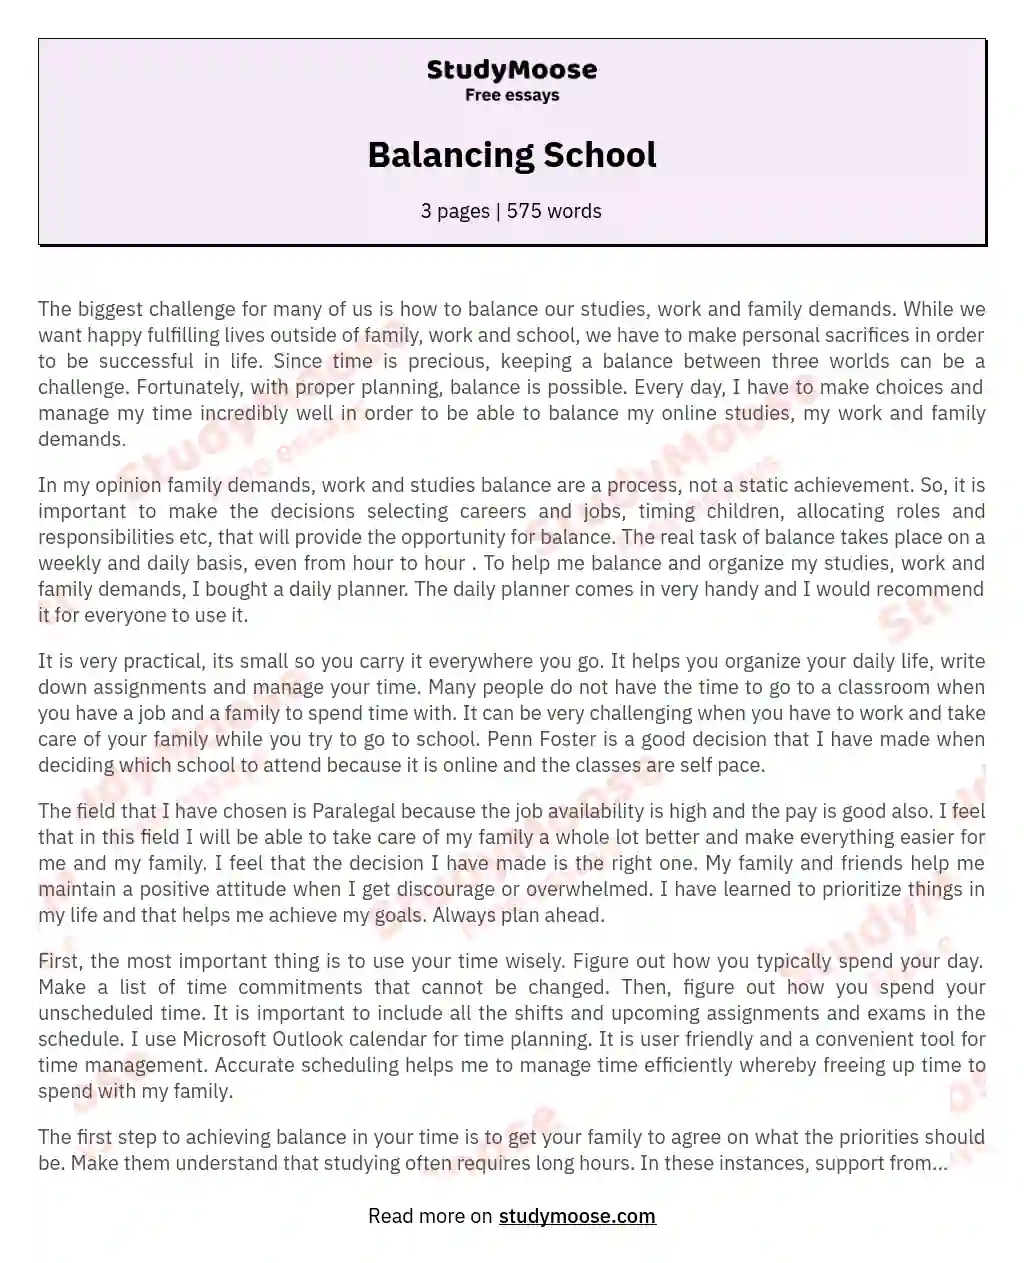 Balancing School essay